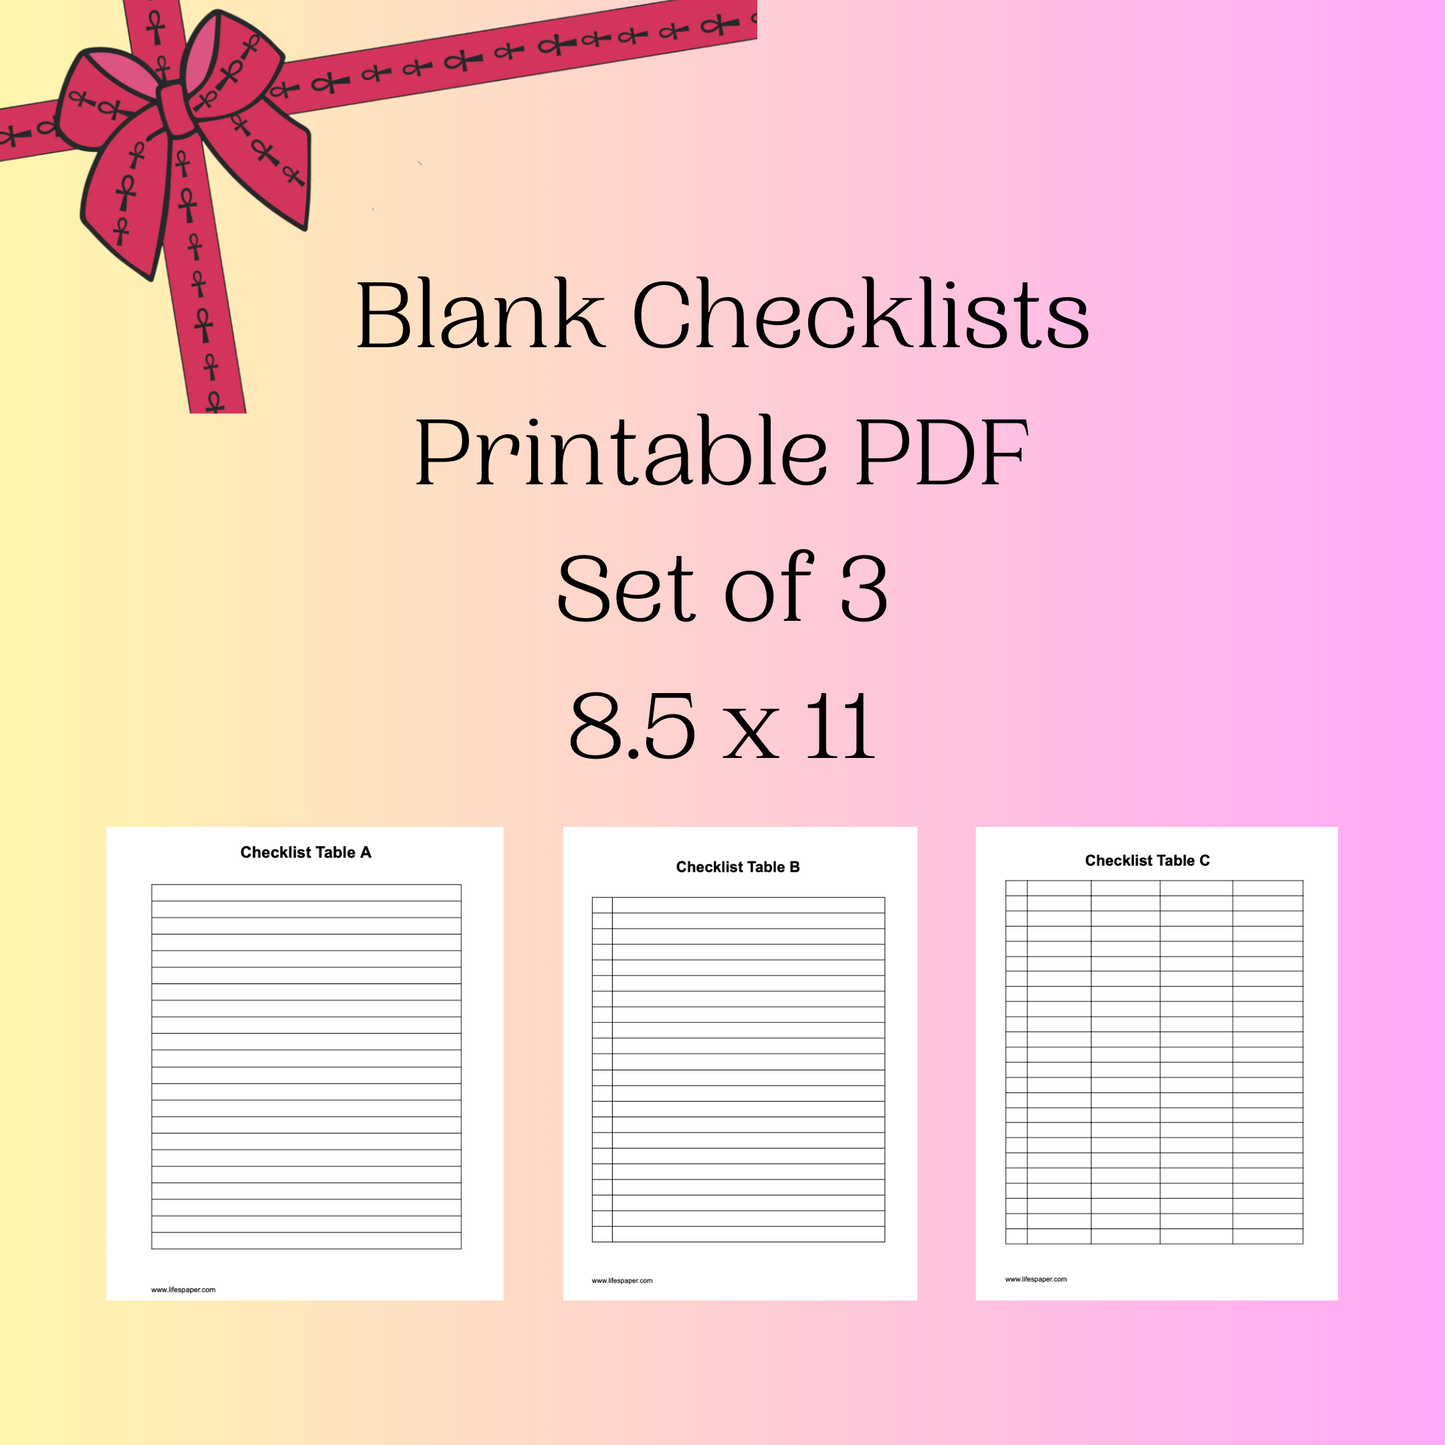 Blank Checklist Table Set of 3-Printable PDF